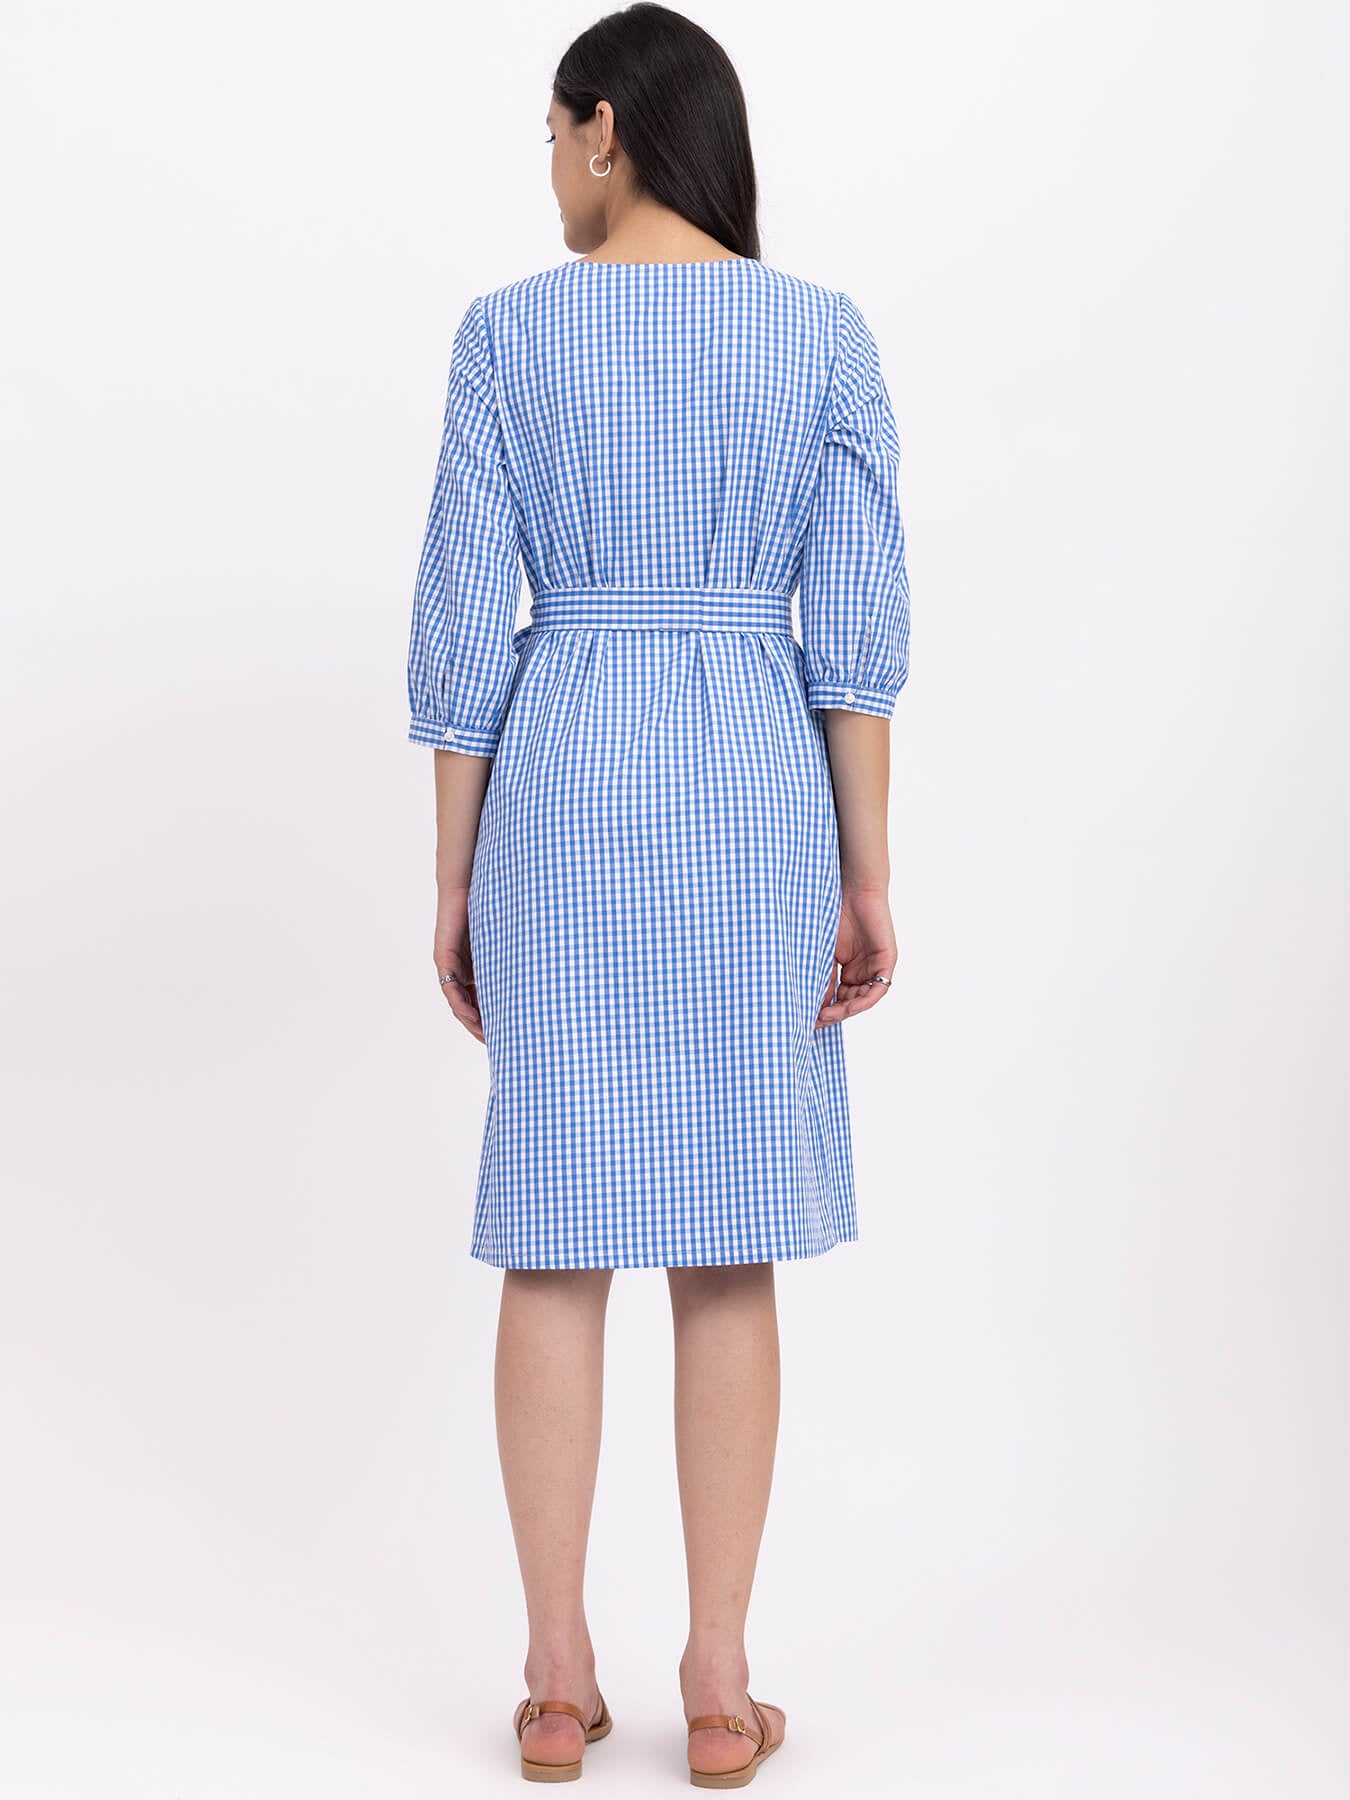 Cotton Checkered Square Neck Dress - Blue And White